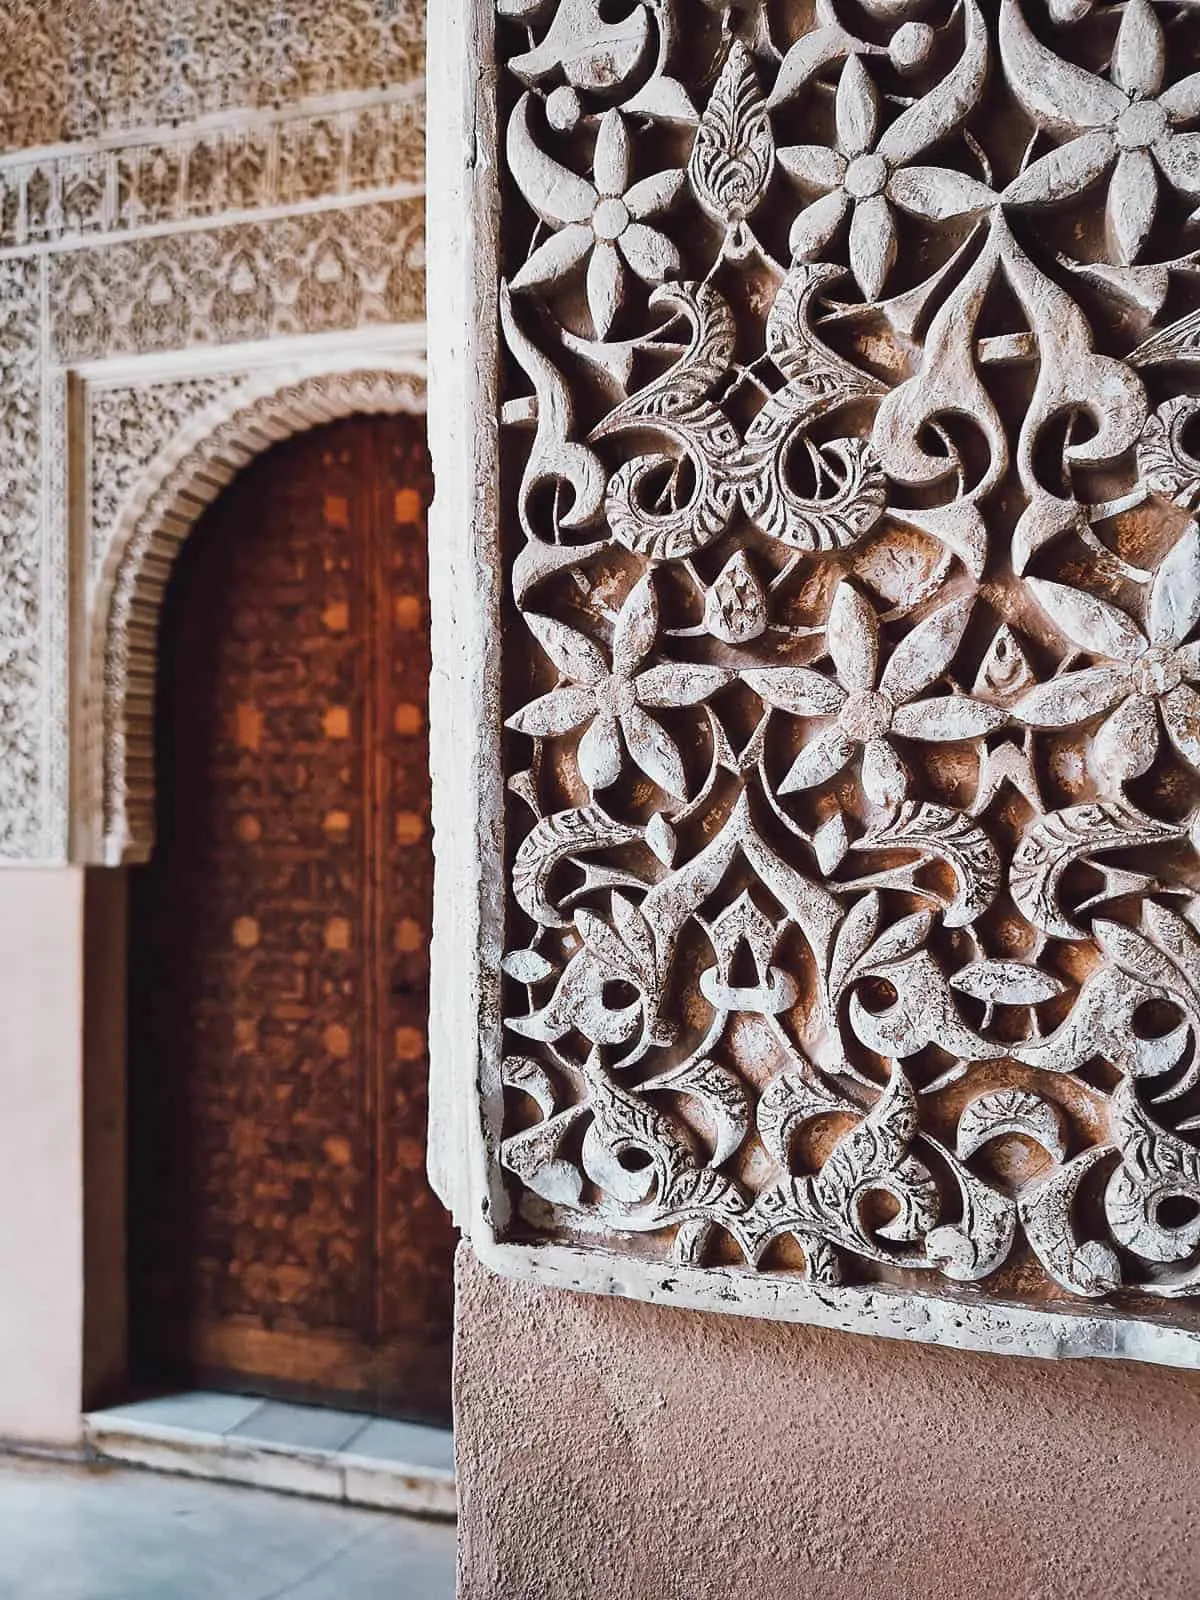 Intricate carvings at Nasrid Palaces in Granada, Spain